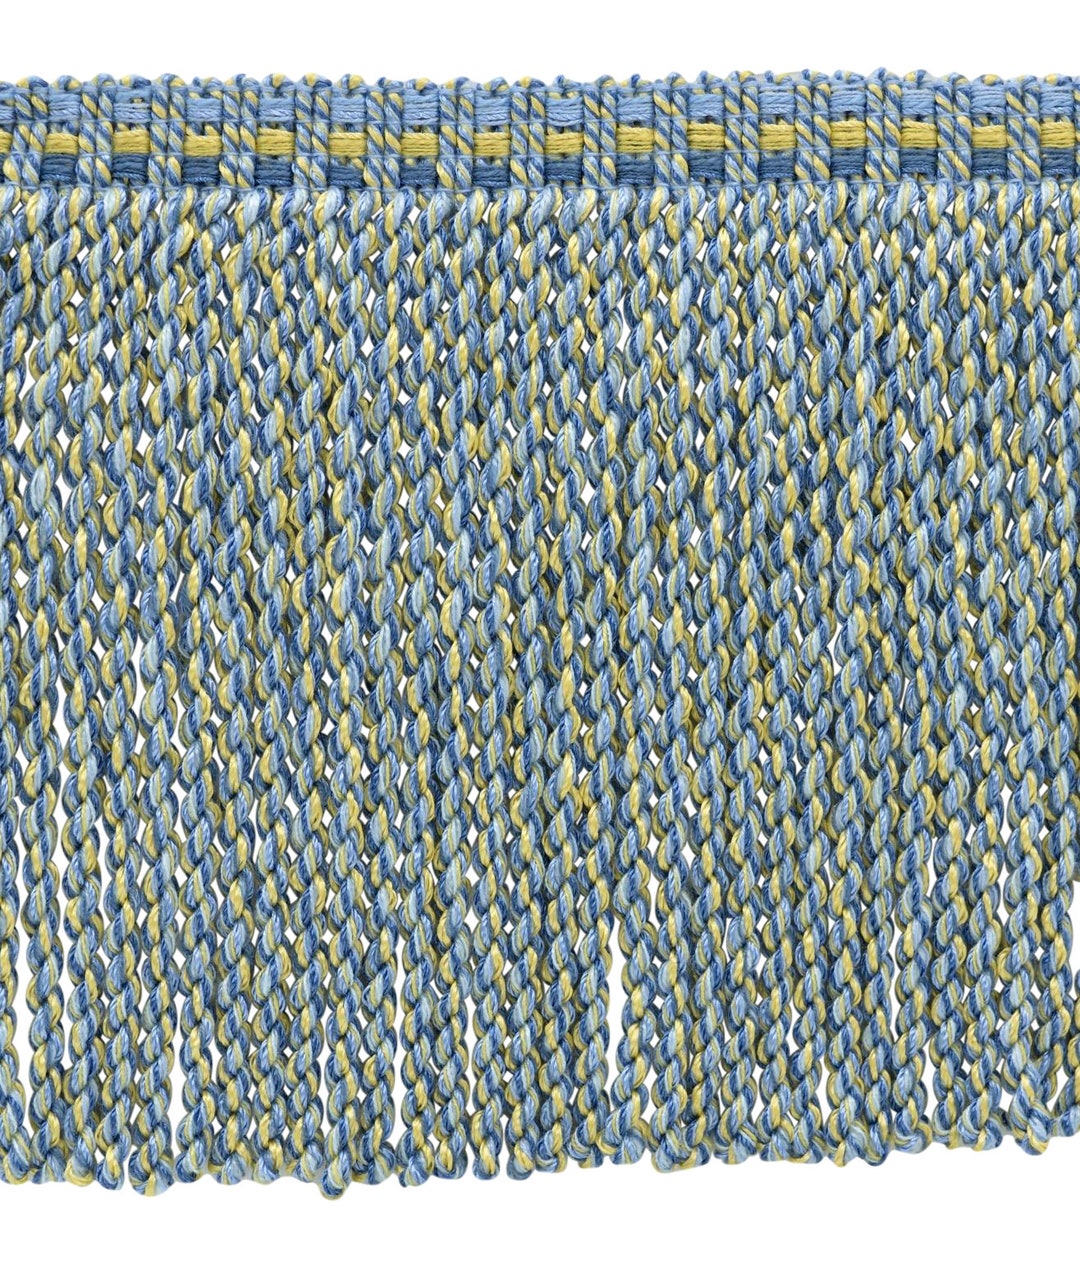 3 (7.5cm) Basic Trim Collection Thin Bullion Fringe Trim with Decorative  Knitted Gimp Header (Style# BFT3), 10 Yards (30 ft/9.5m)